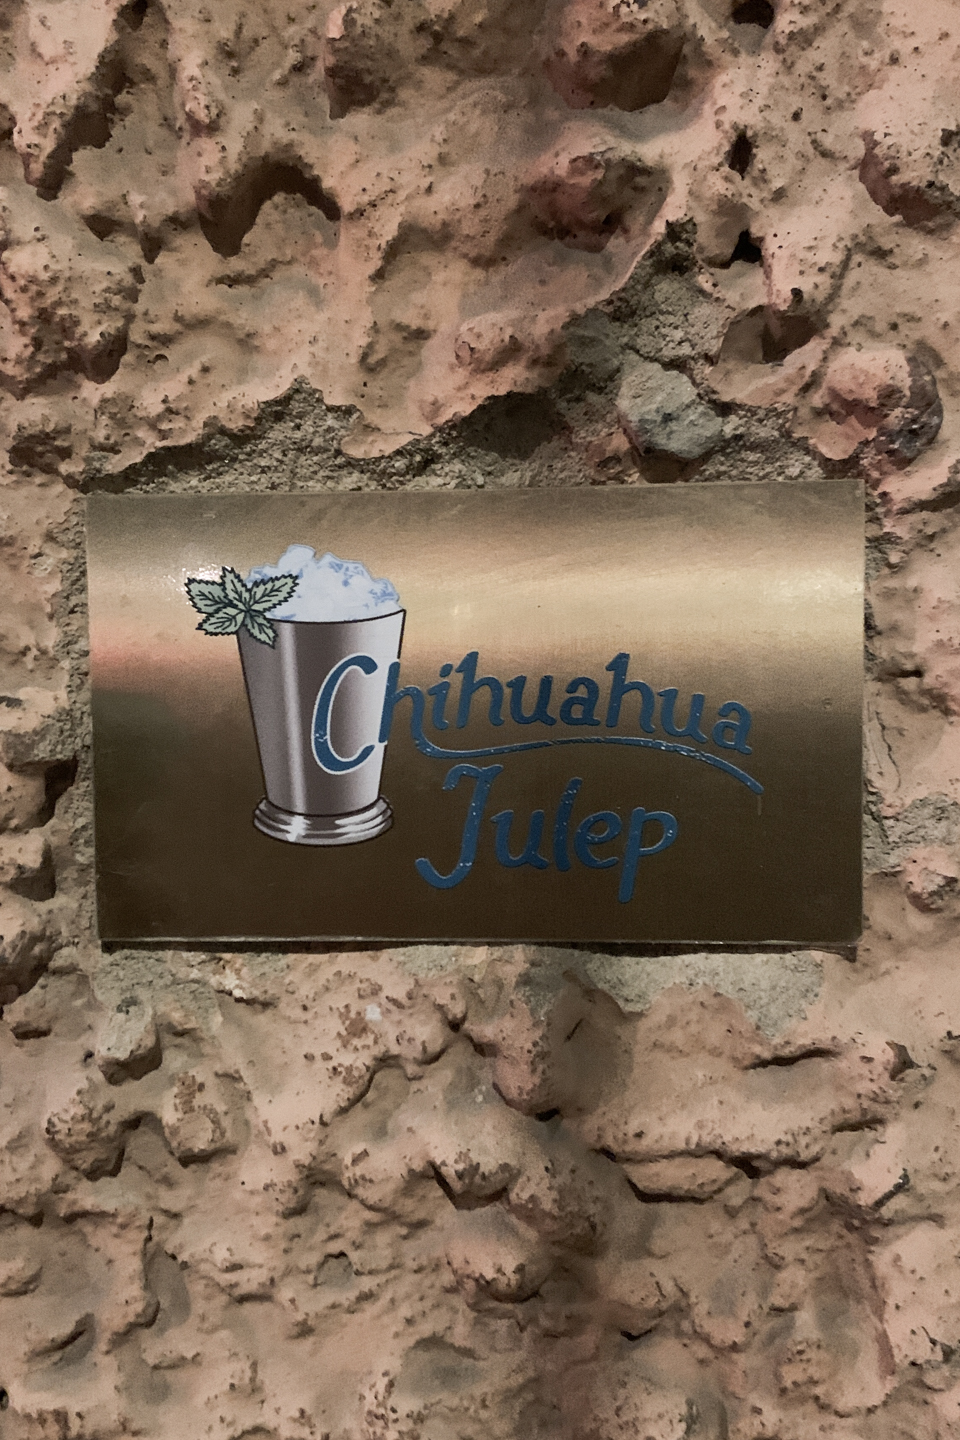 Sign for Chihuahua Julep bar